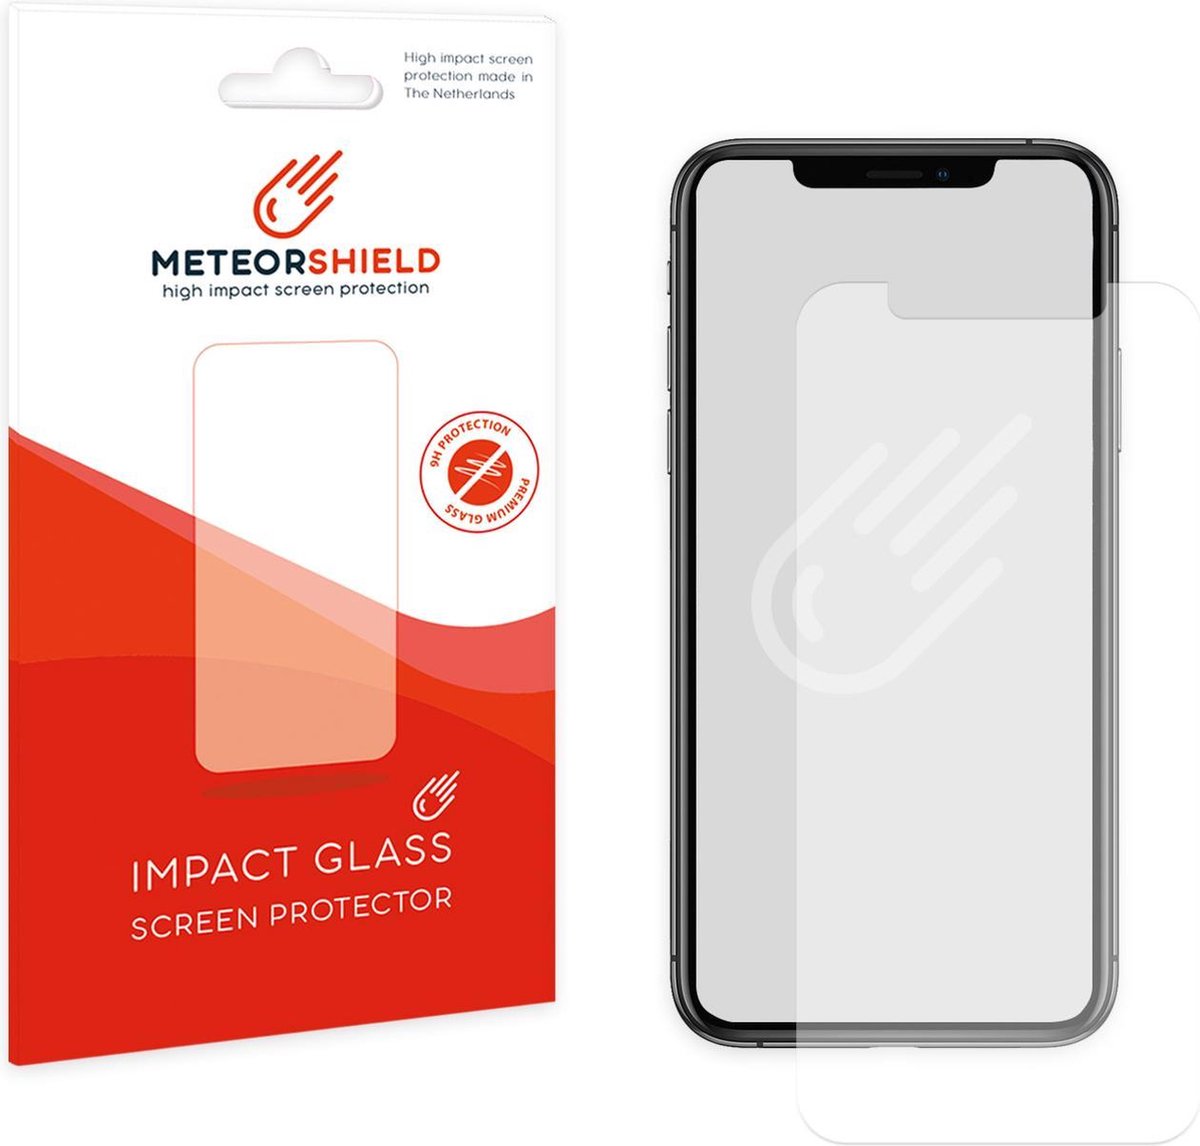 Meteorshield iPhone 11 Pro screenprotector - Ultra clear impact glass